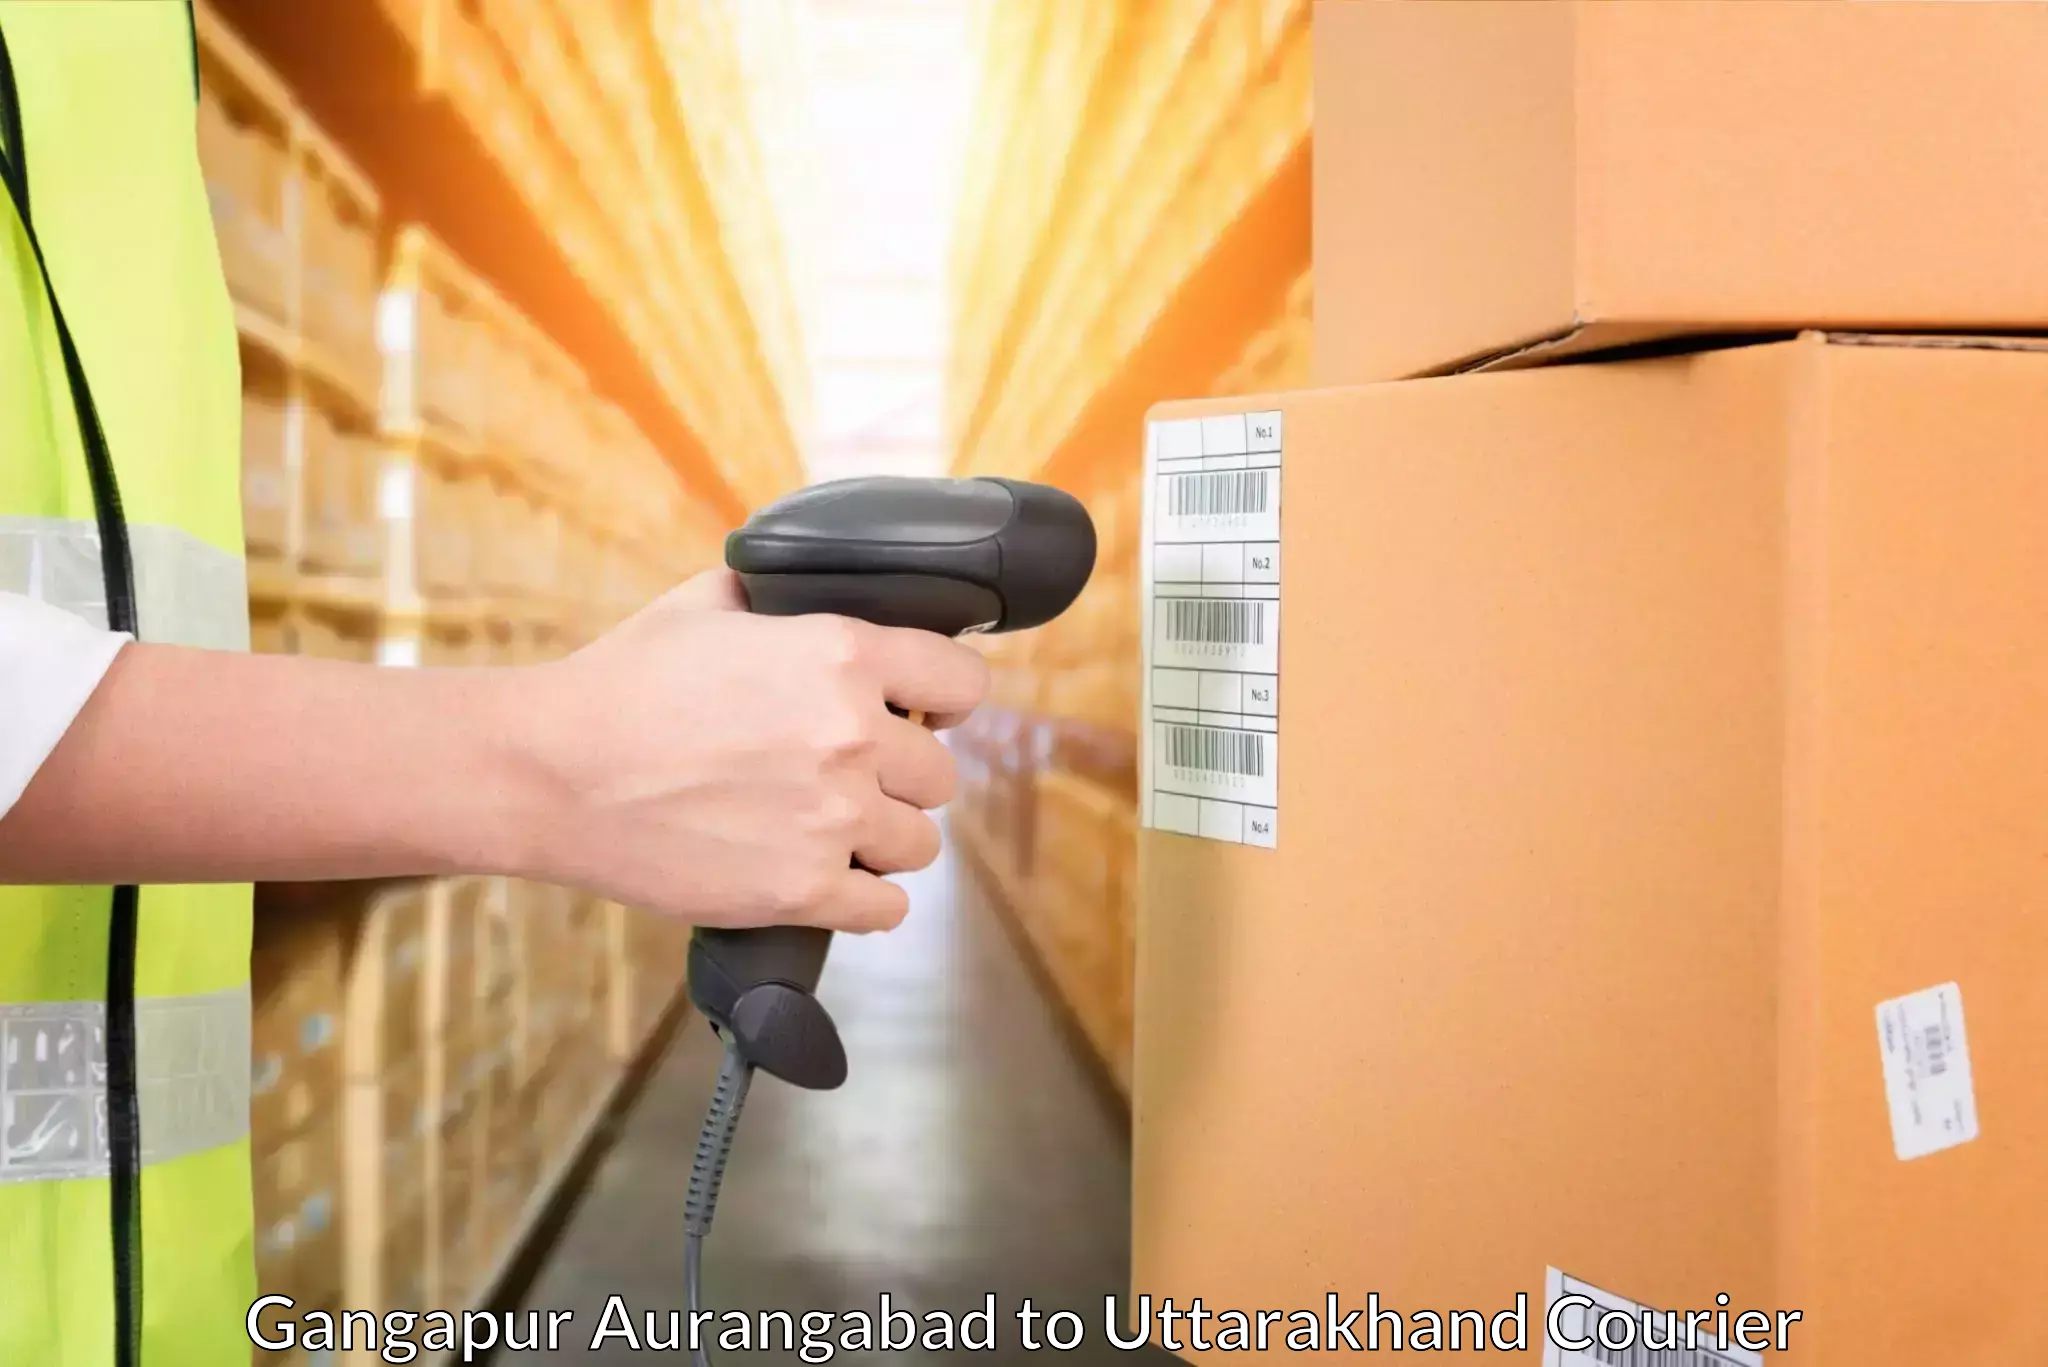 Personalized courier experiences Gangapur Aurangabad to Karnaprayag